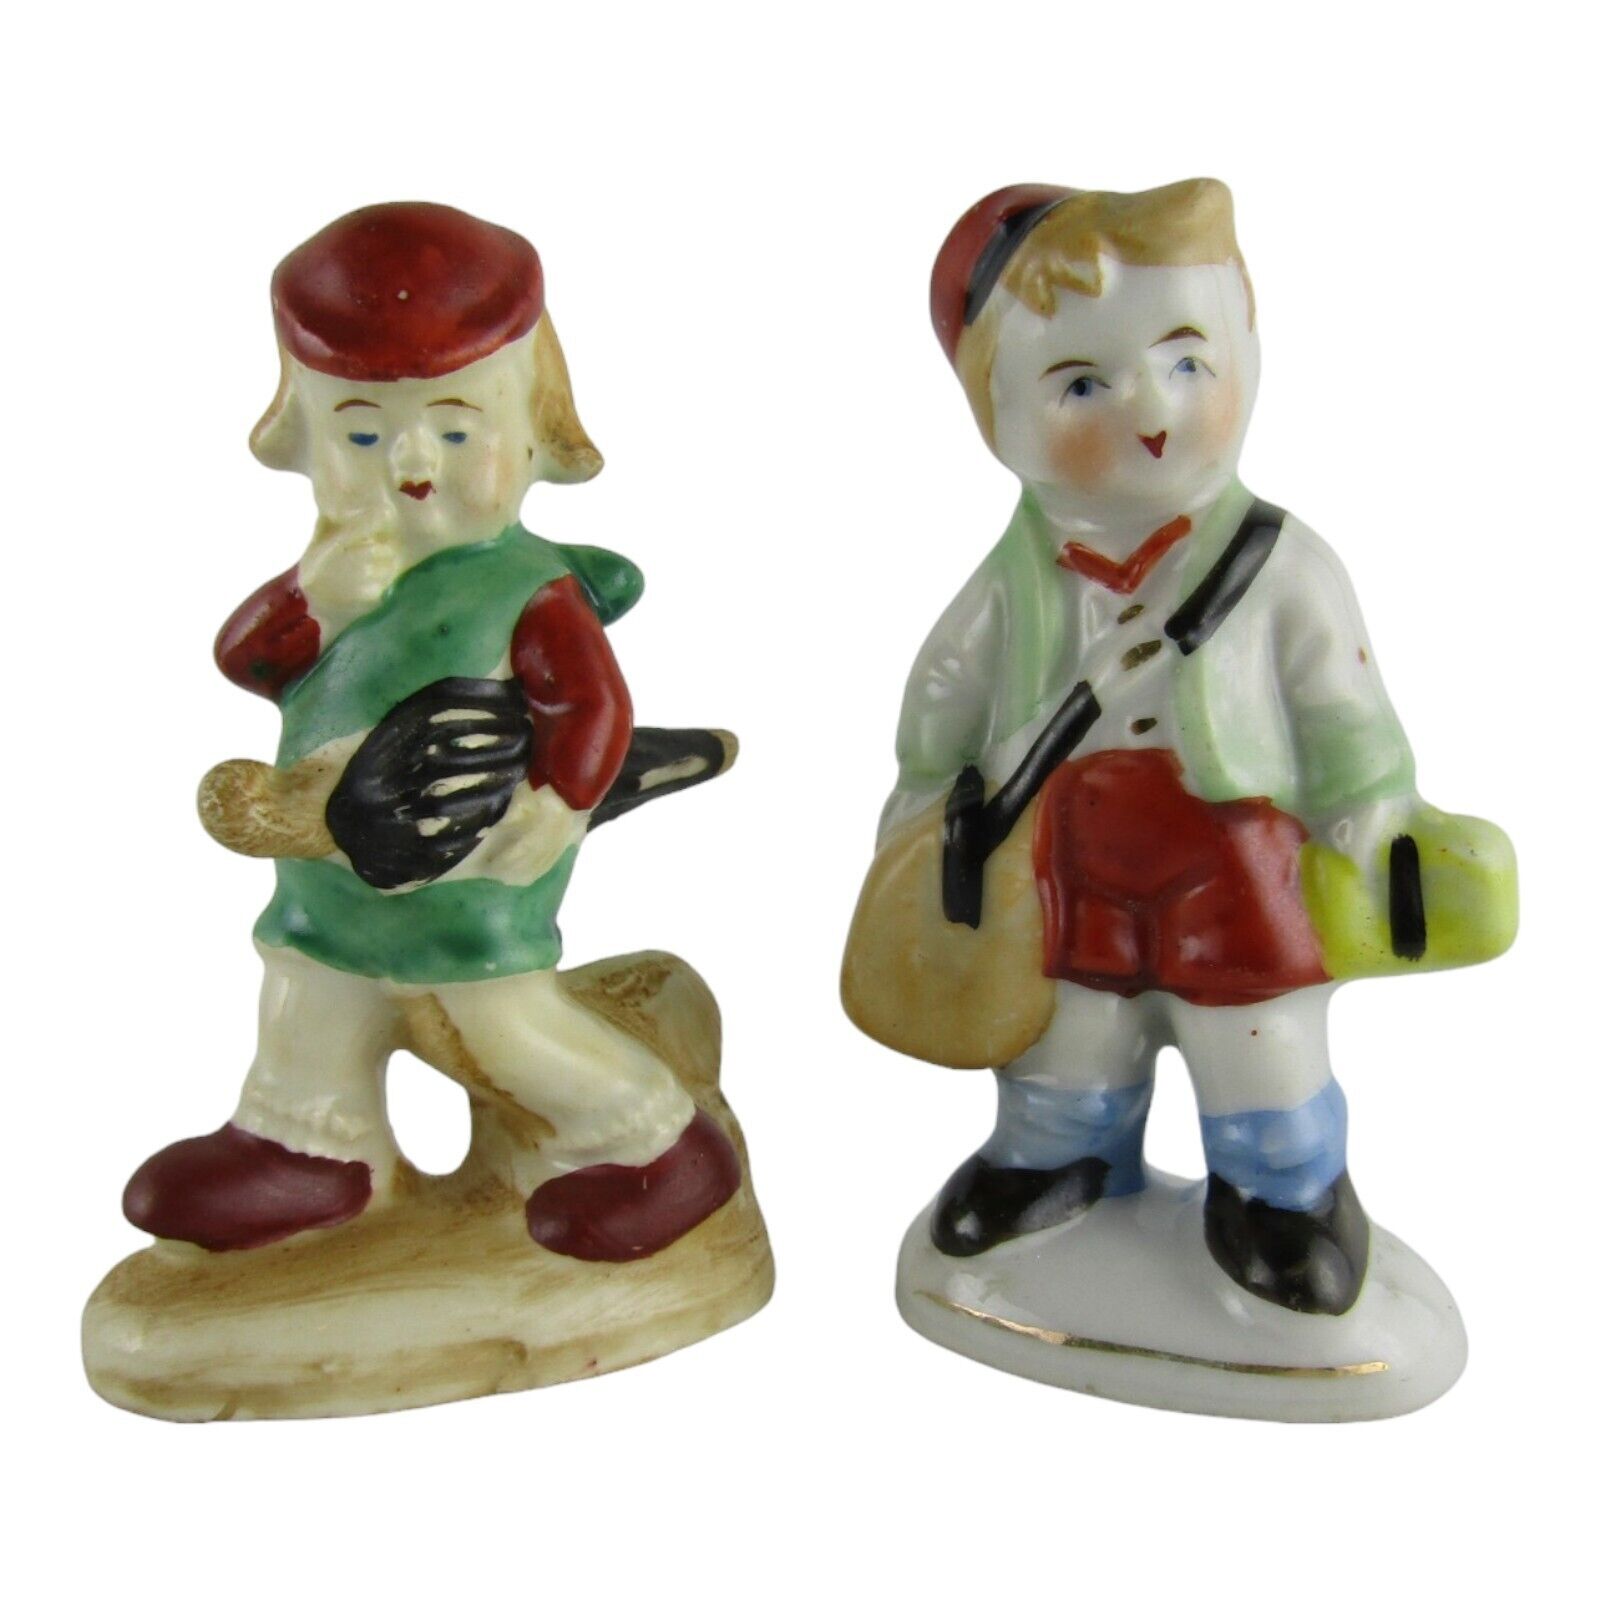 2 Vintage Occupied Japan Ceramic Figurines, School Boy and Girl,